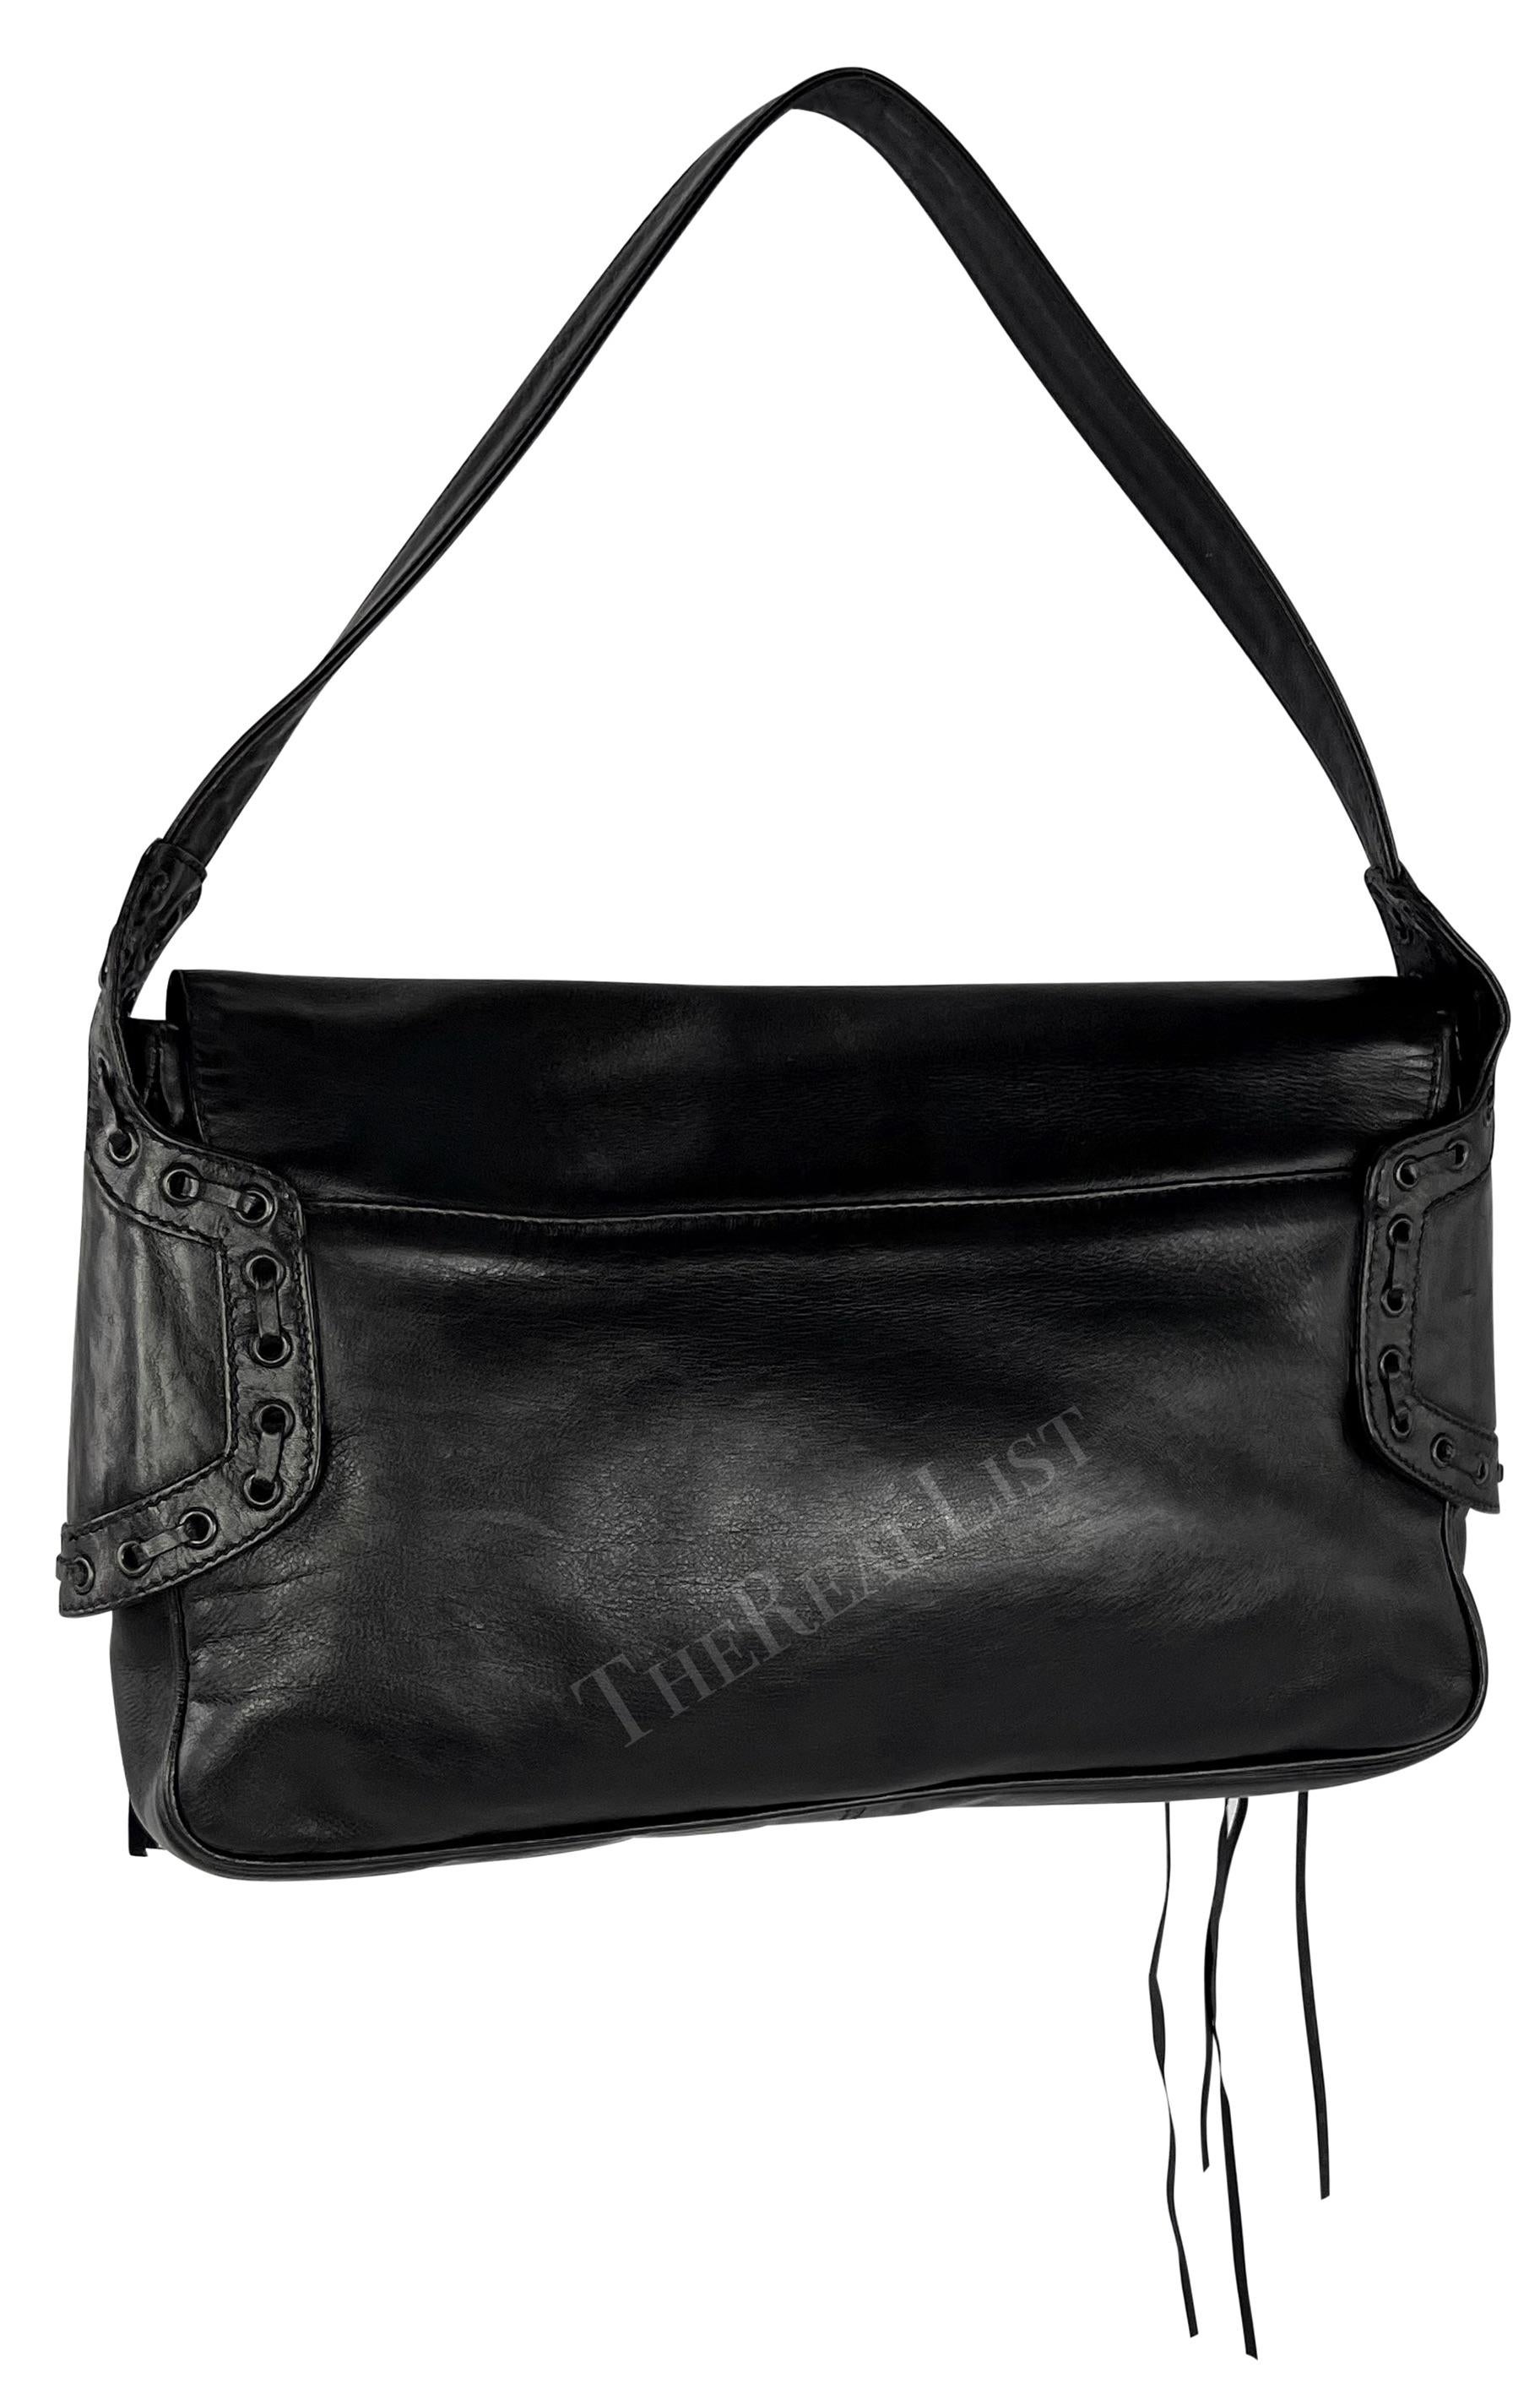 S/S 2002 Gianni Versace by Donatella Black Leather Lace Up Fringe Shoulder Bag For Sale 1